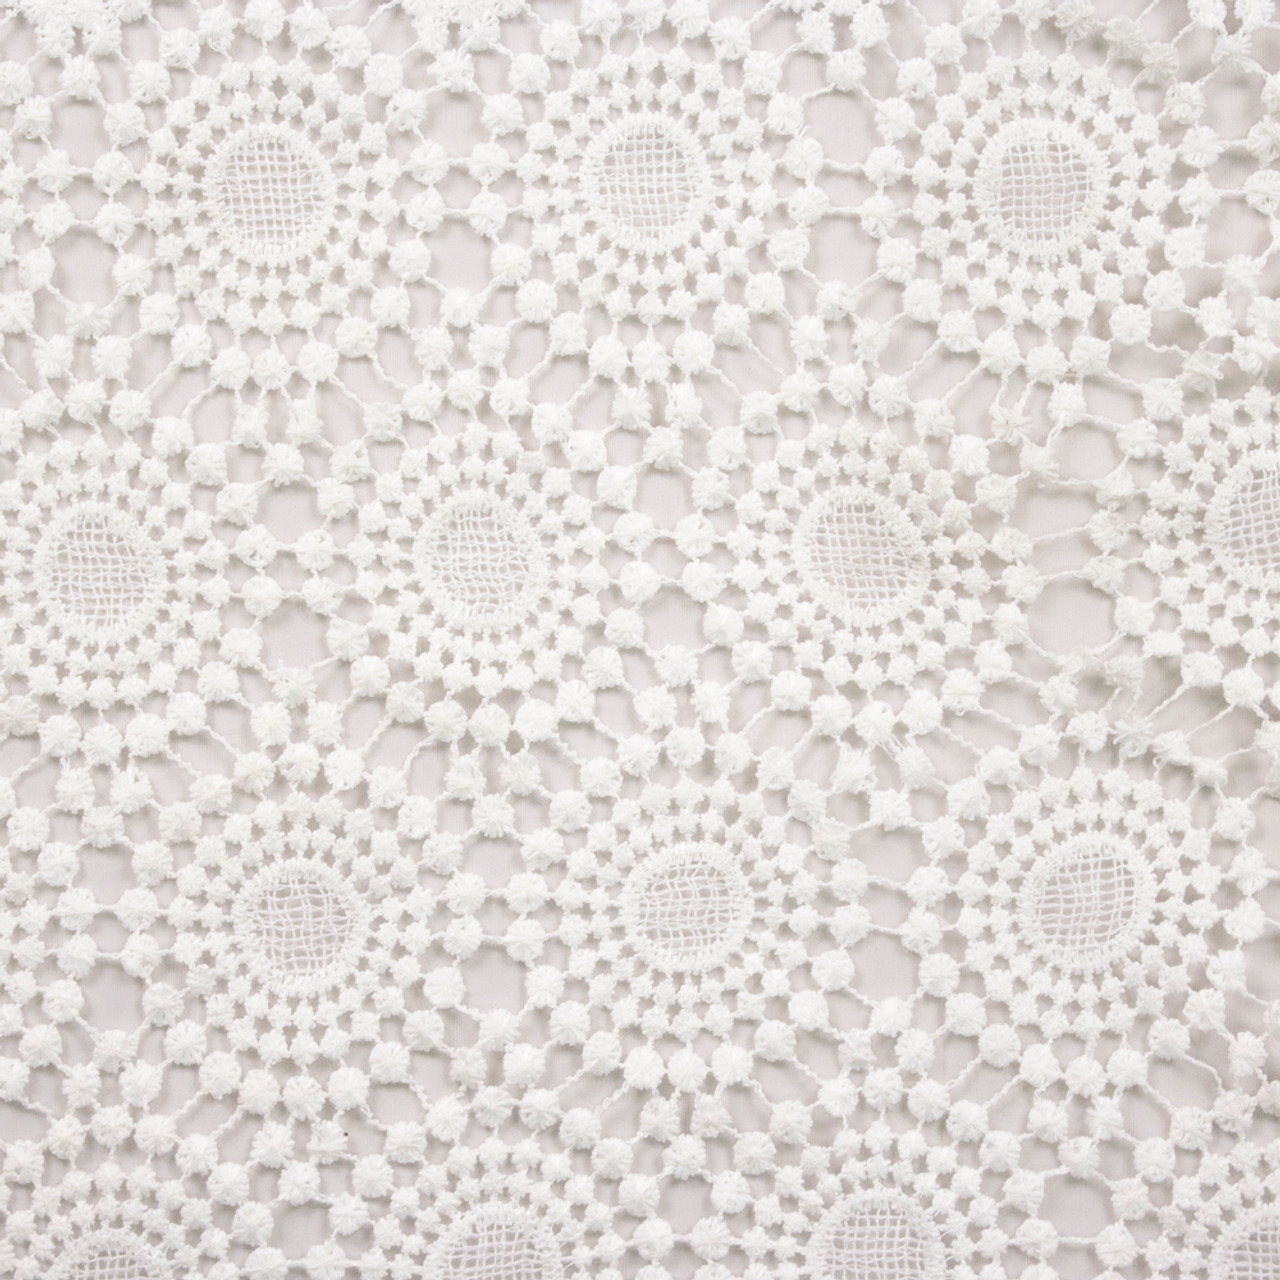 Cali Fabrics Warm White Medallion Pattern Stretch Lace Fabric by the Yard